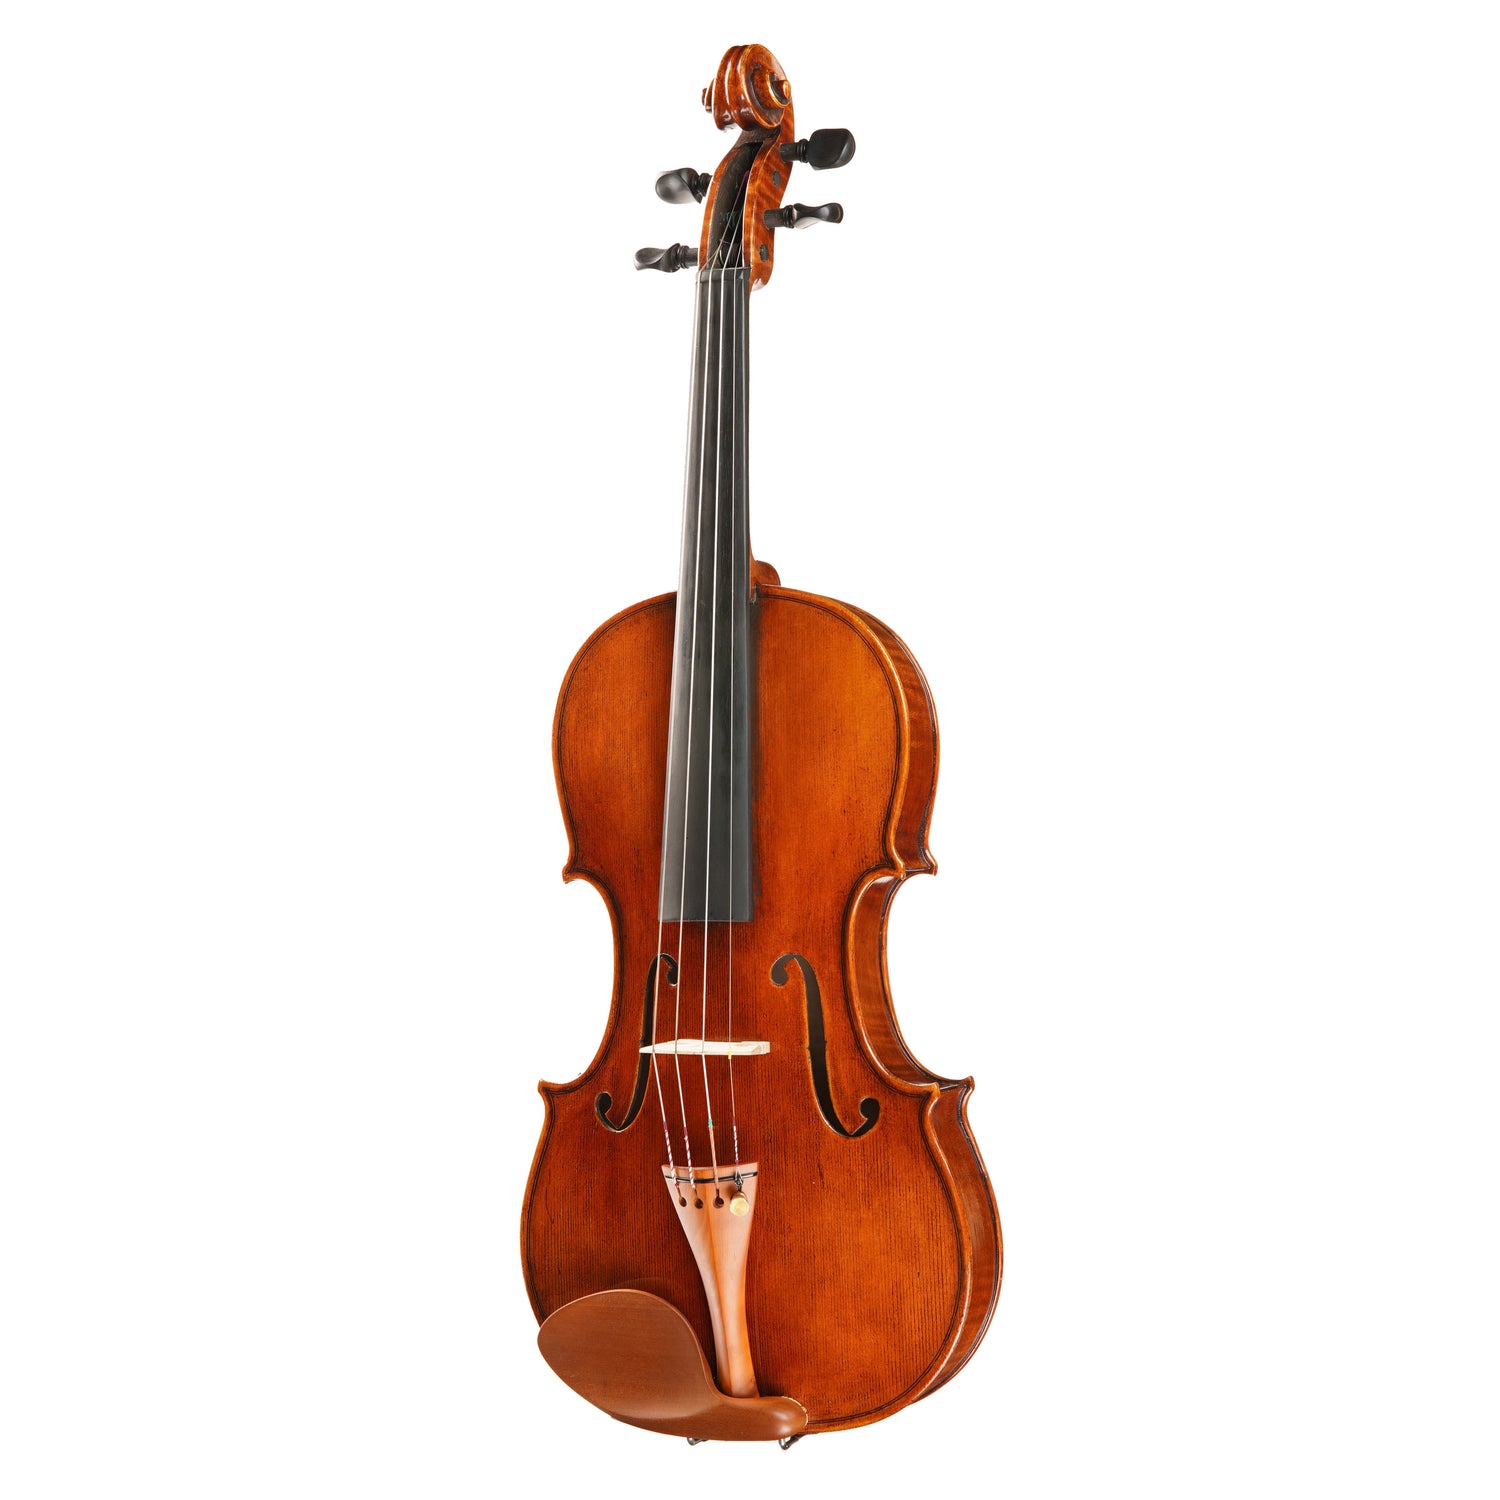 Maker's Violin